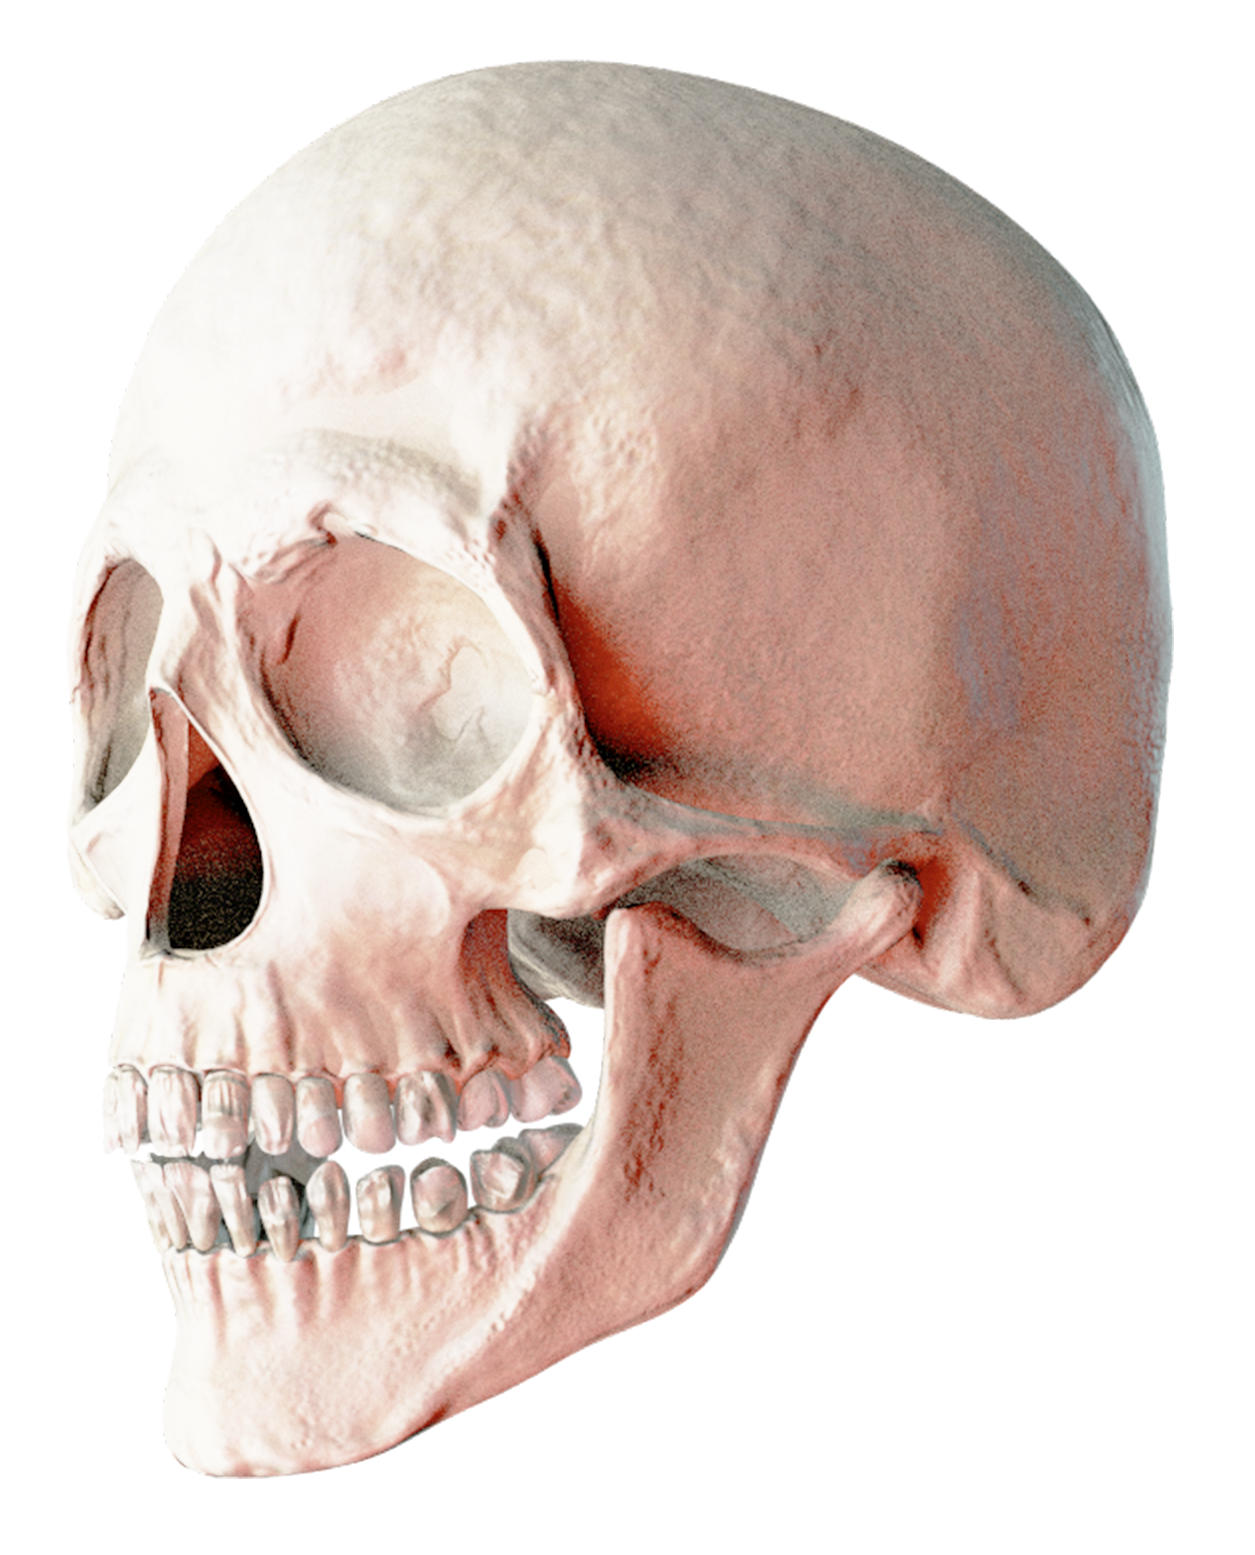 Skull PNG